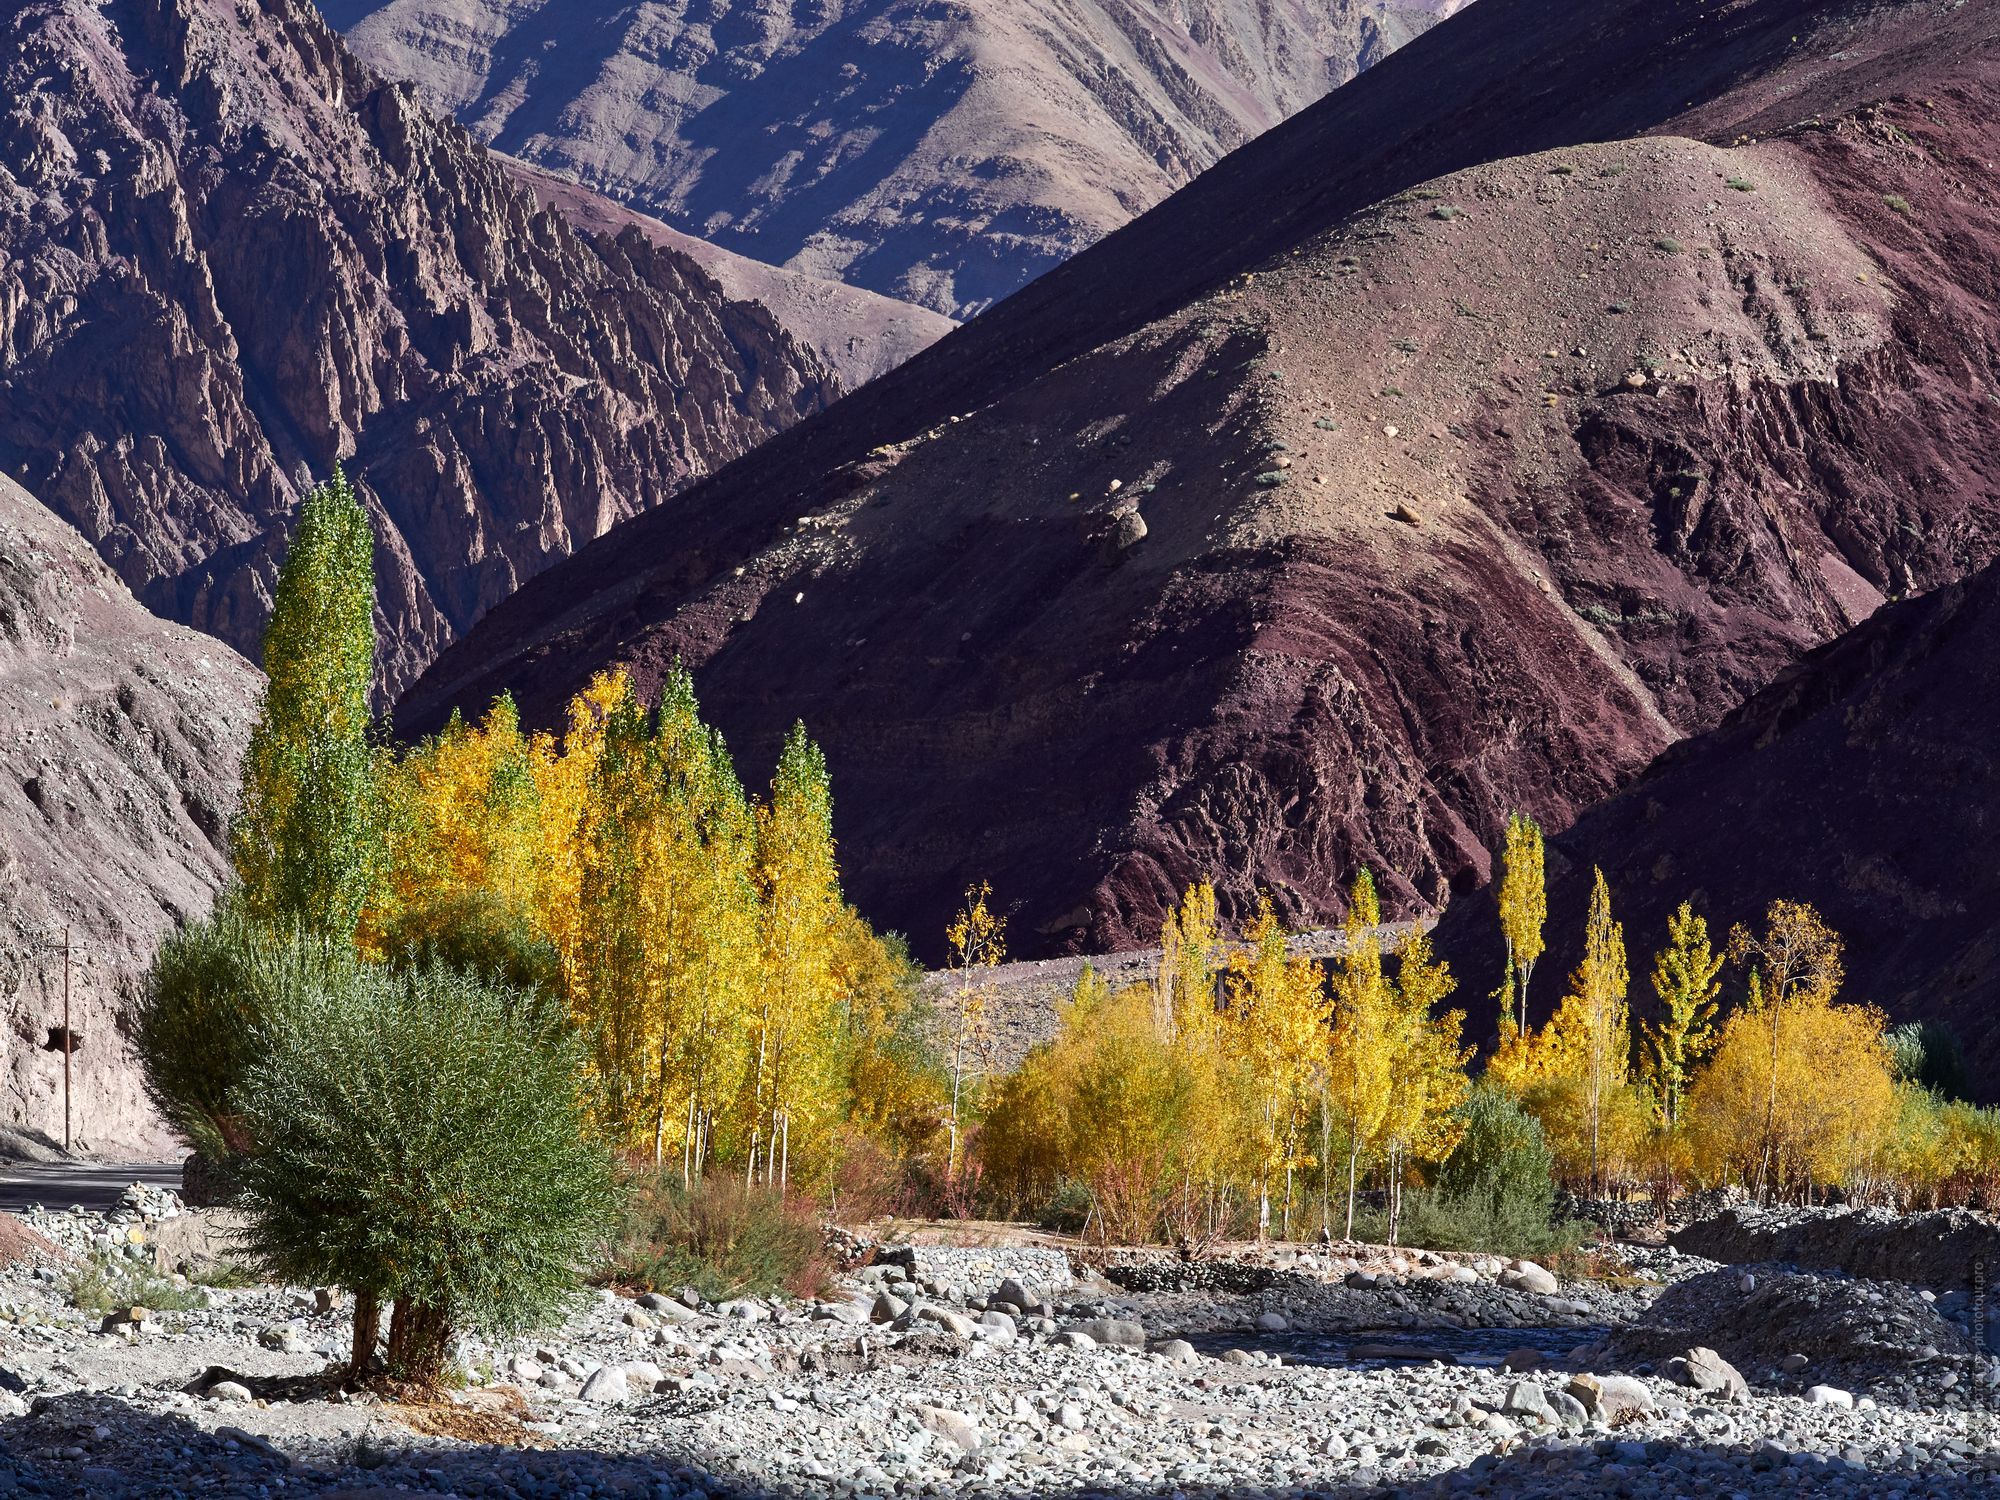 Yellow autumn in the Burgundy Gorge of Ladakh, Ladakh women's tour, August 31 - September 14, 2019.